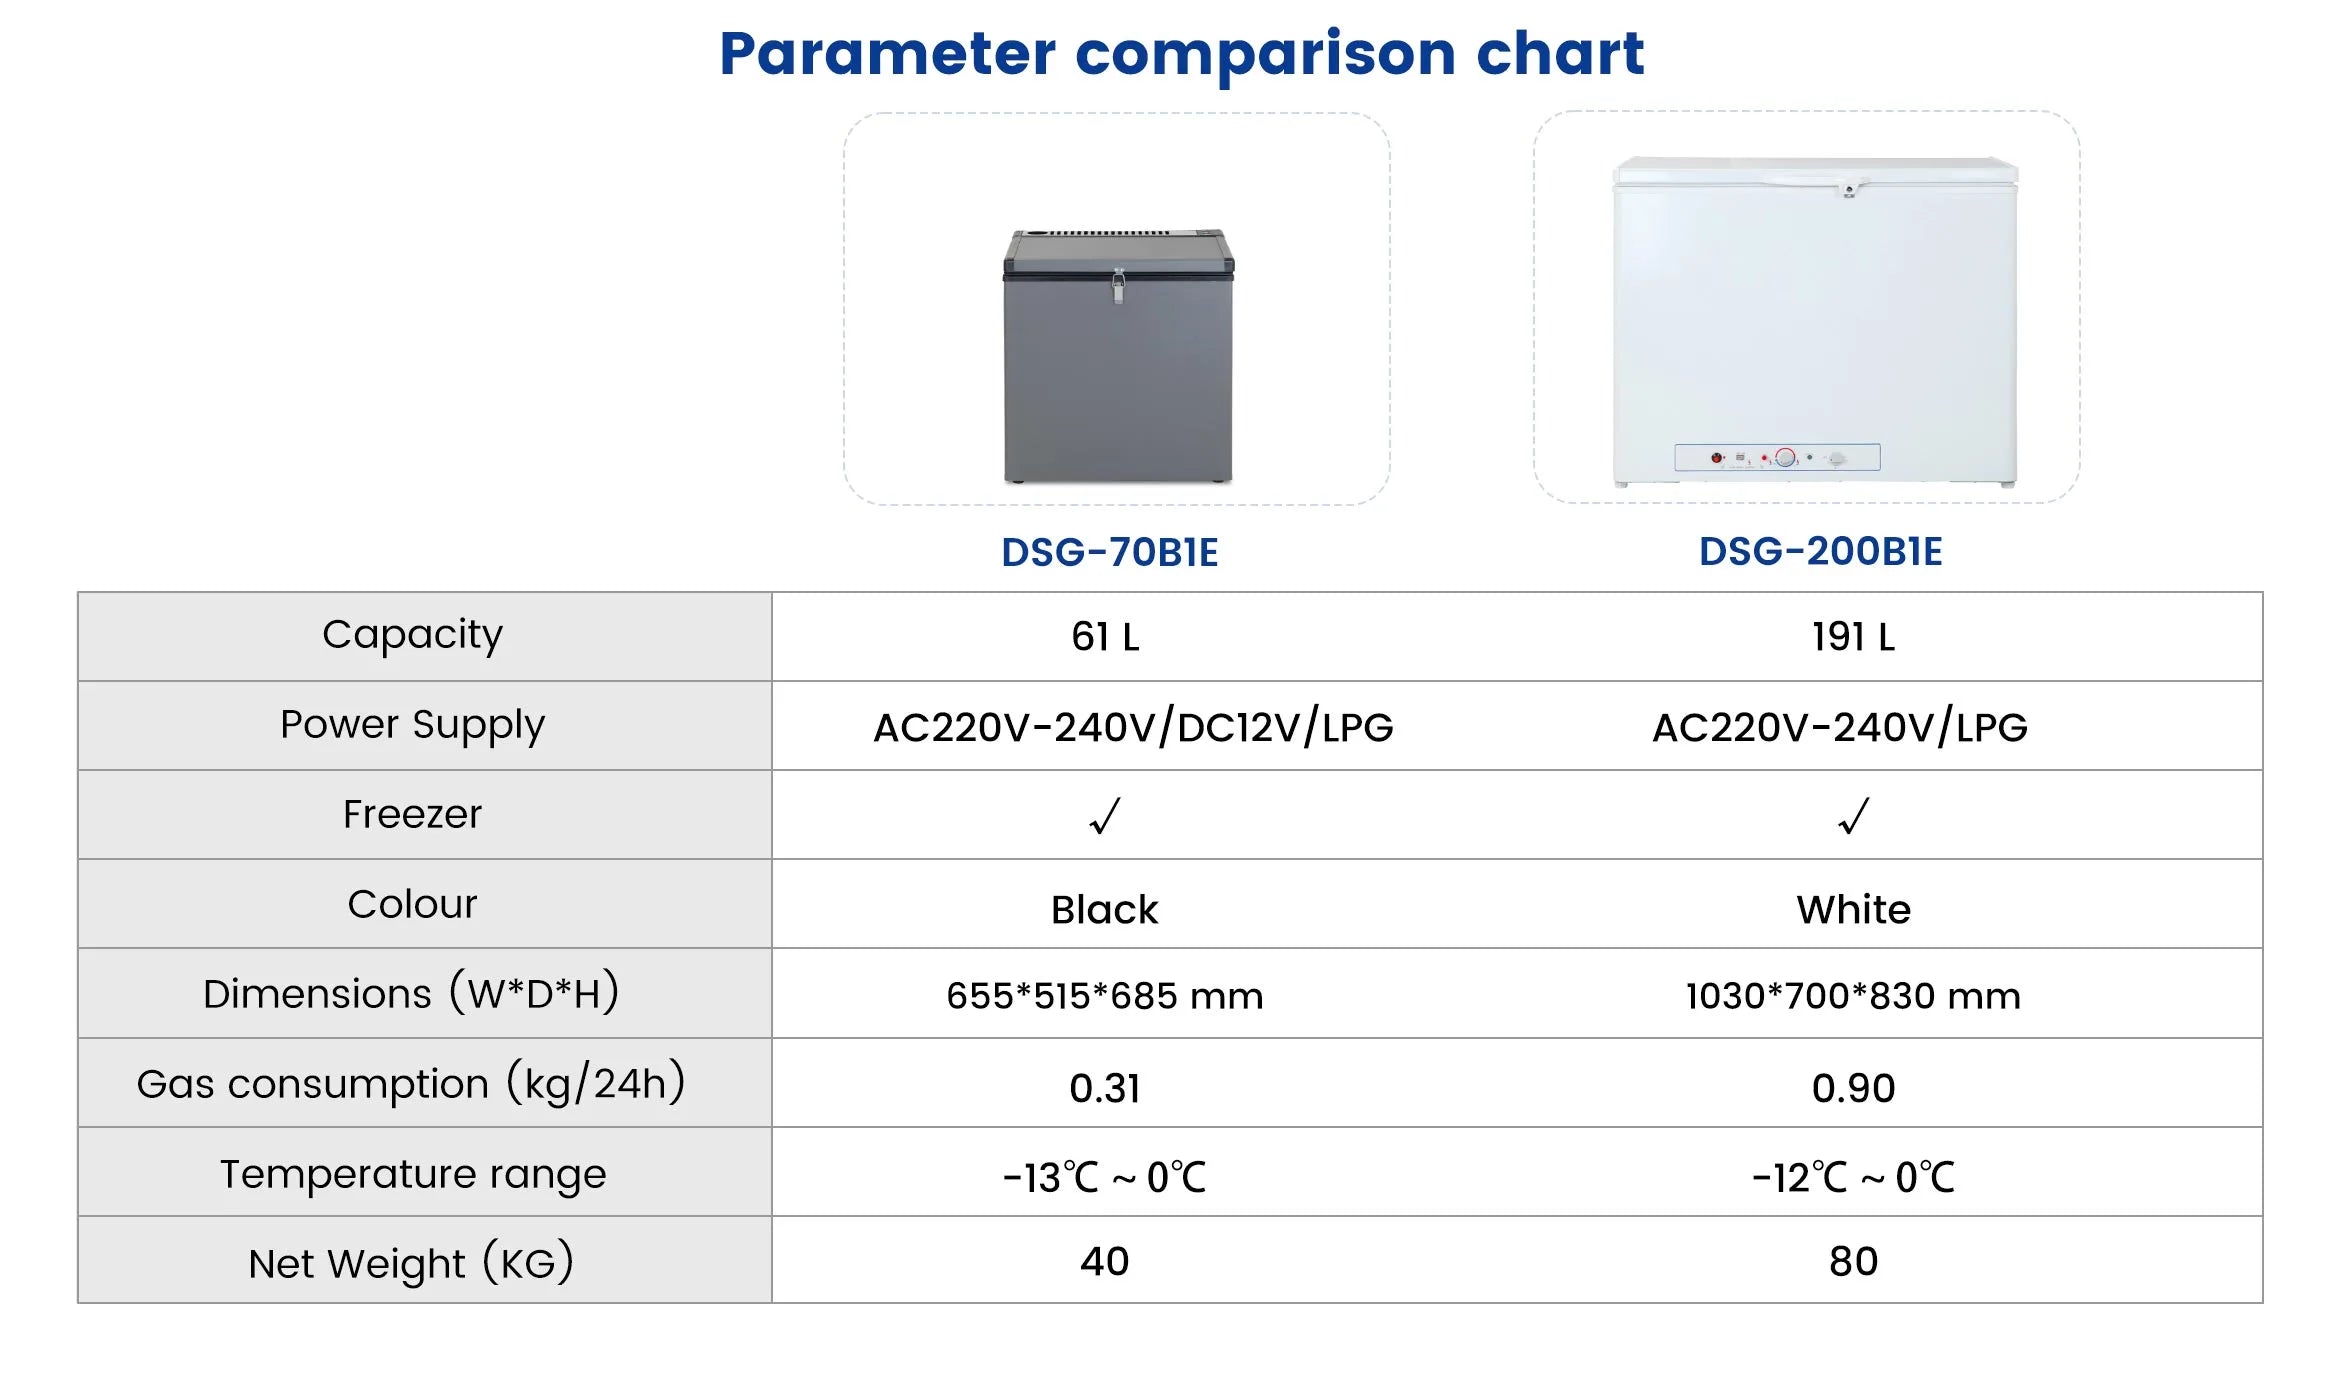 DSG-70B1E Parameter comparison chart